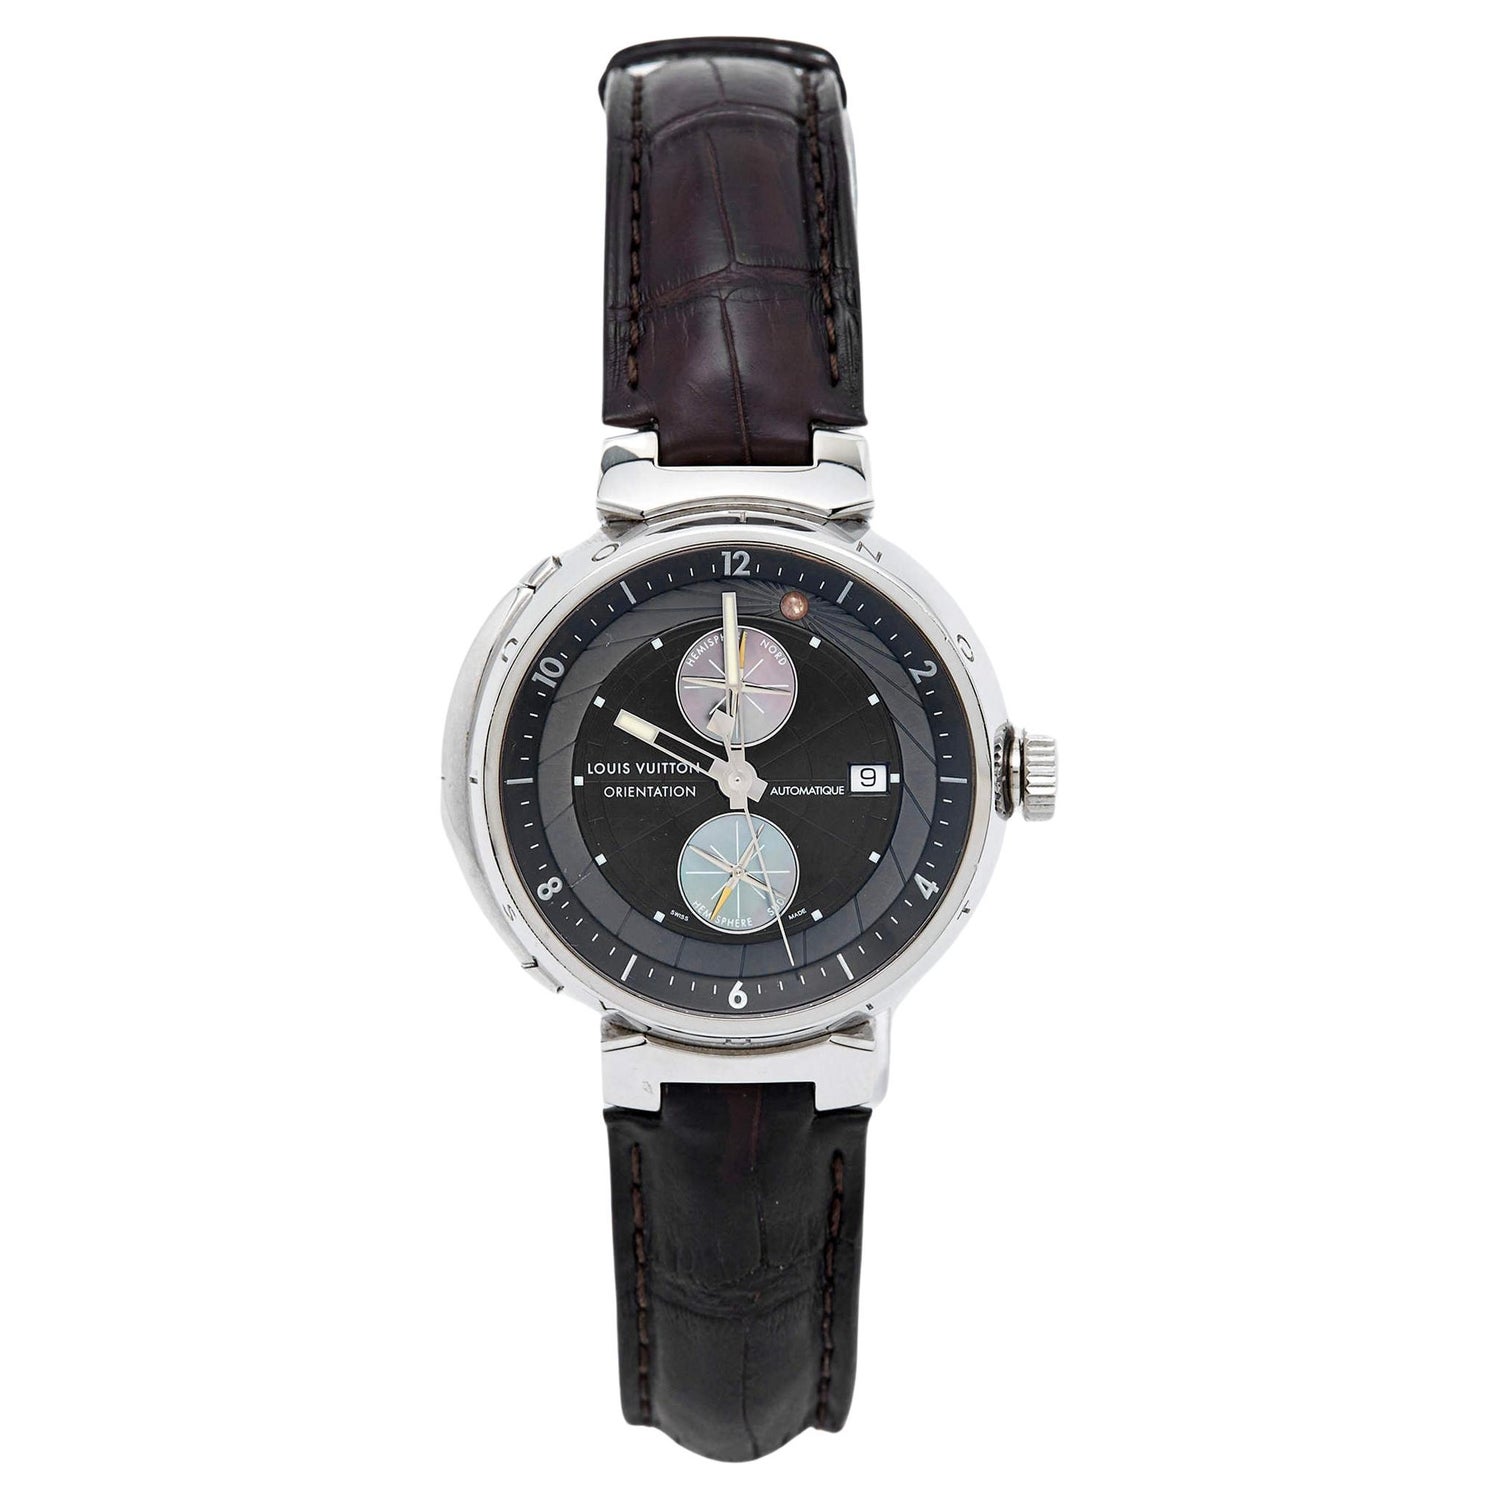 Louis Vuitton Tambour in Black LV277 Q114K El Primero Chronograph  Men's Watch